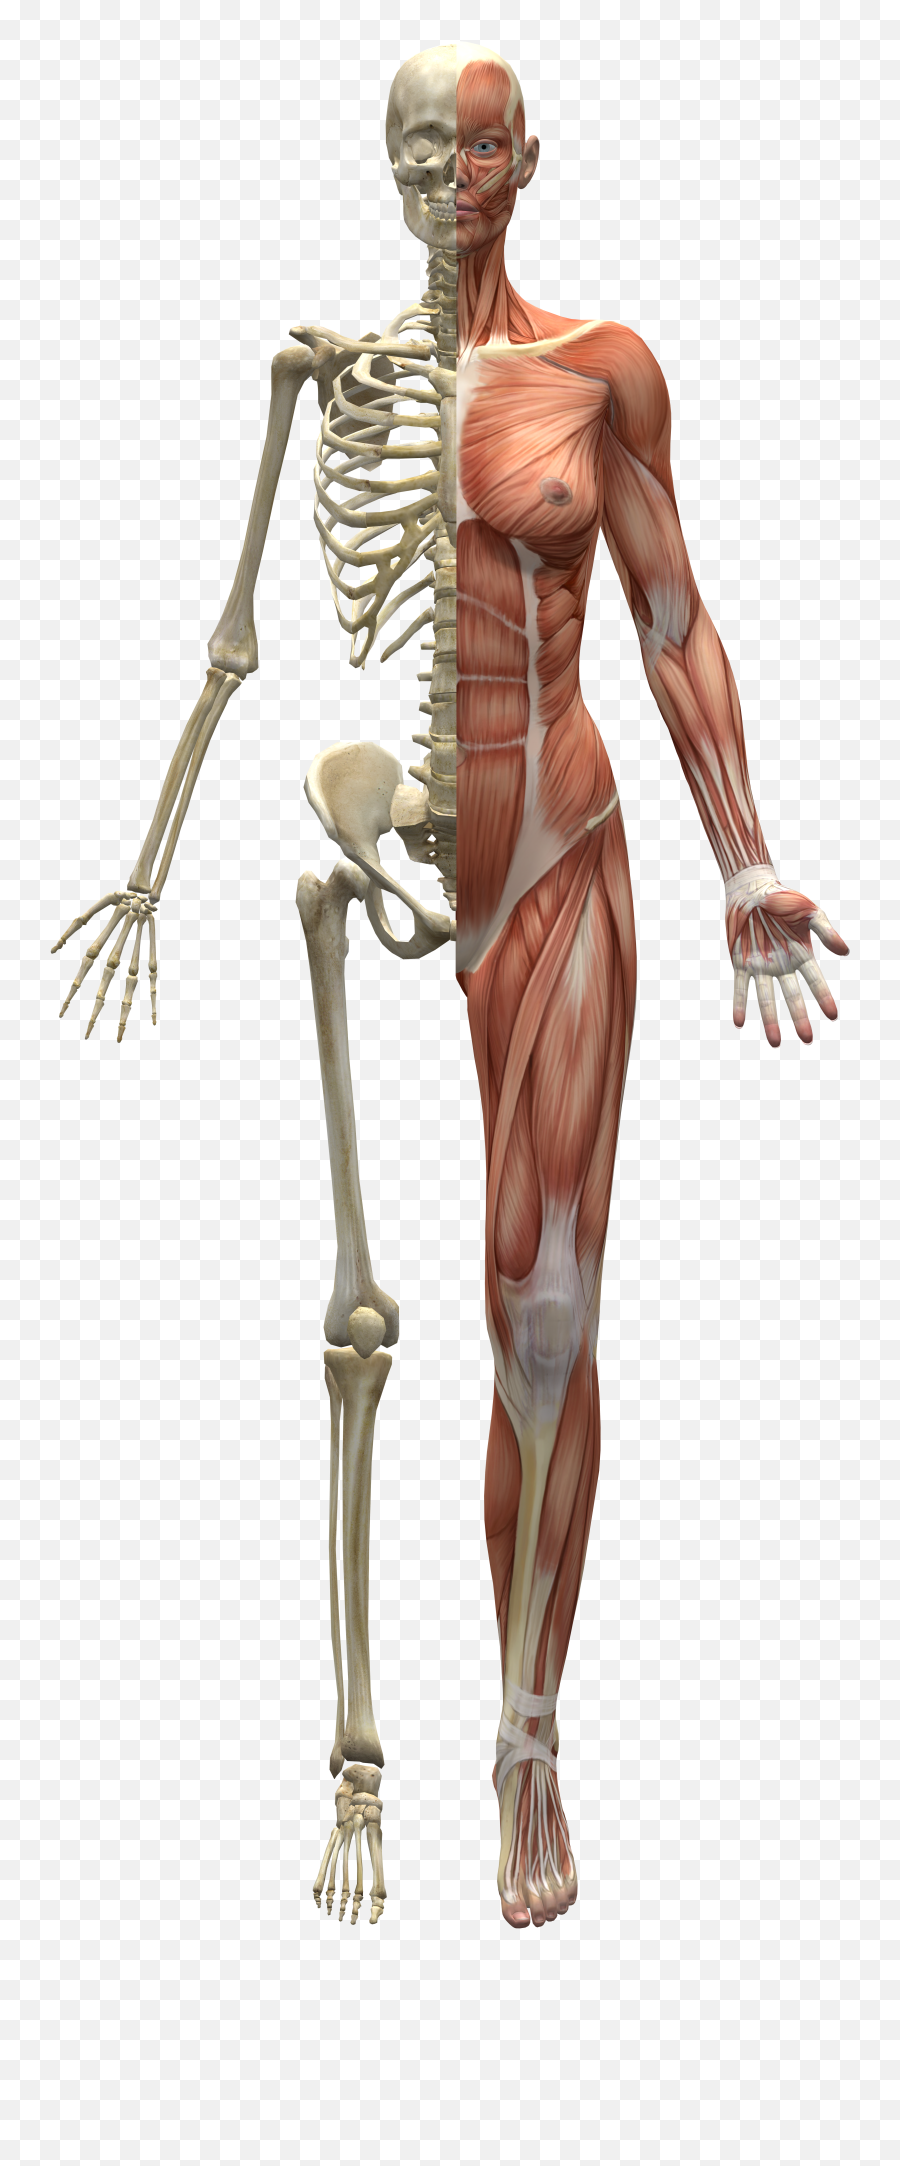 Bone people. Анатомия человека кости и мышцы. Скелет человека с мышцами. Скелет с мышцами человека м. Анатомия костно мышечной системы.